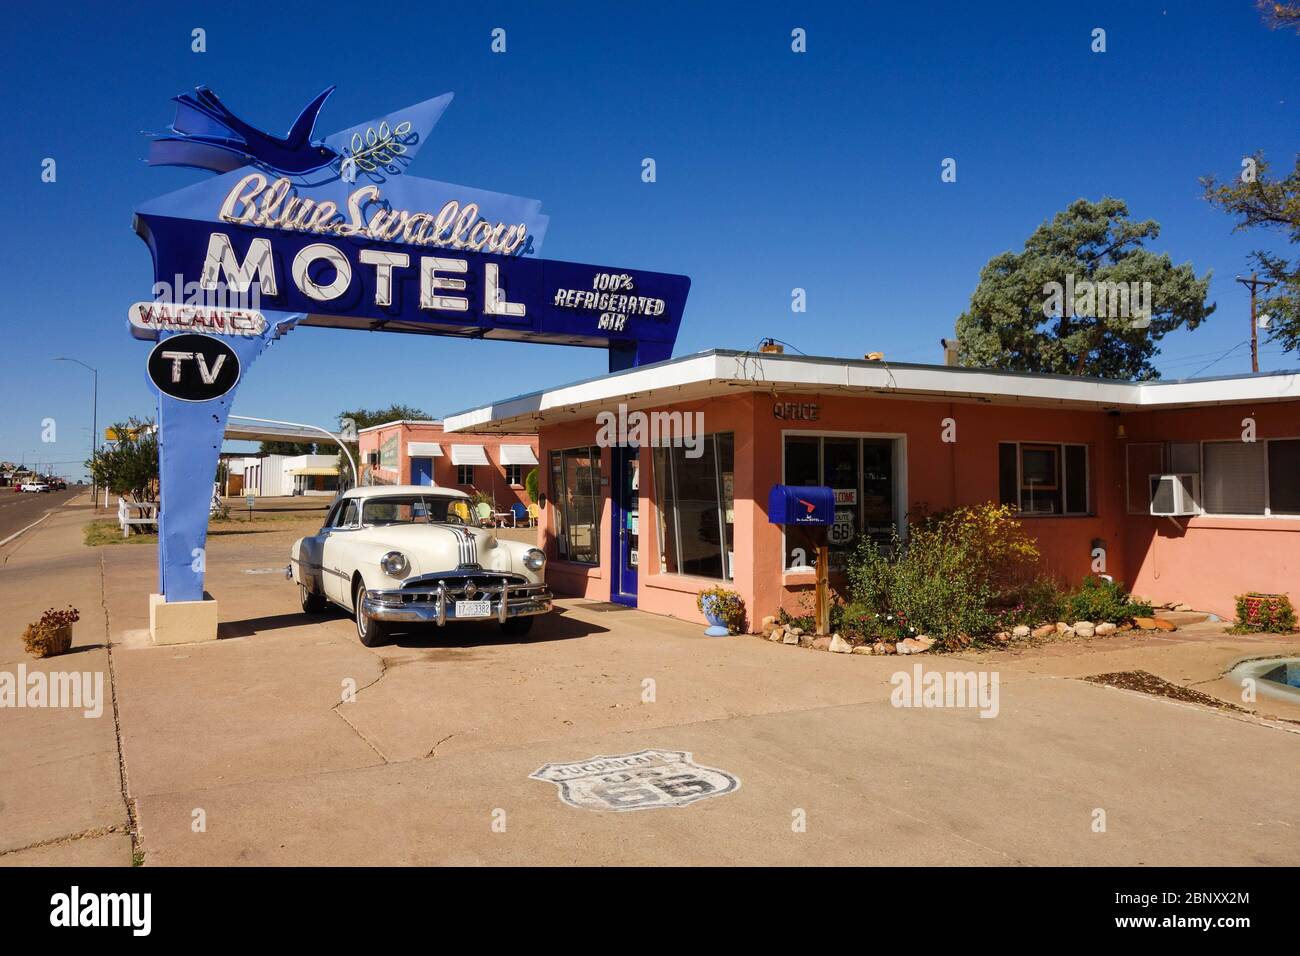 Restored Blue Swallow Motel on Route 66 in Tucumcari, New Mexico Stock Photo